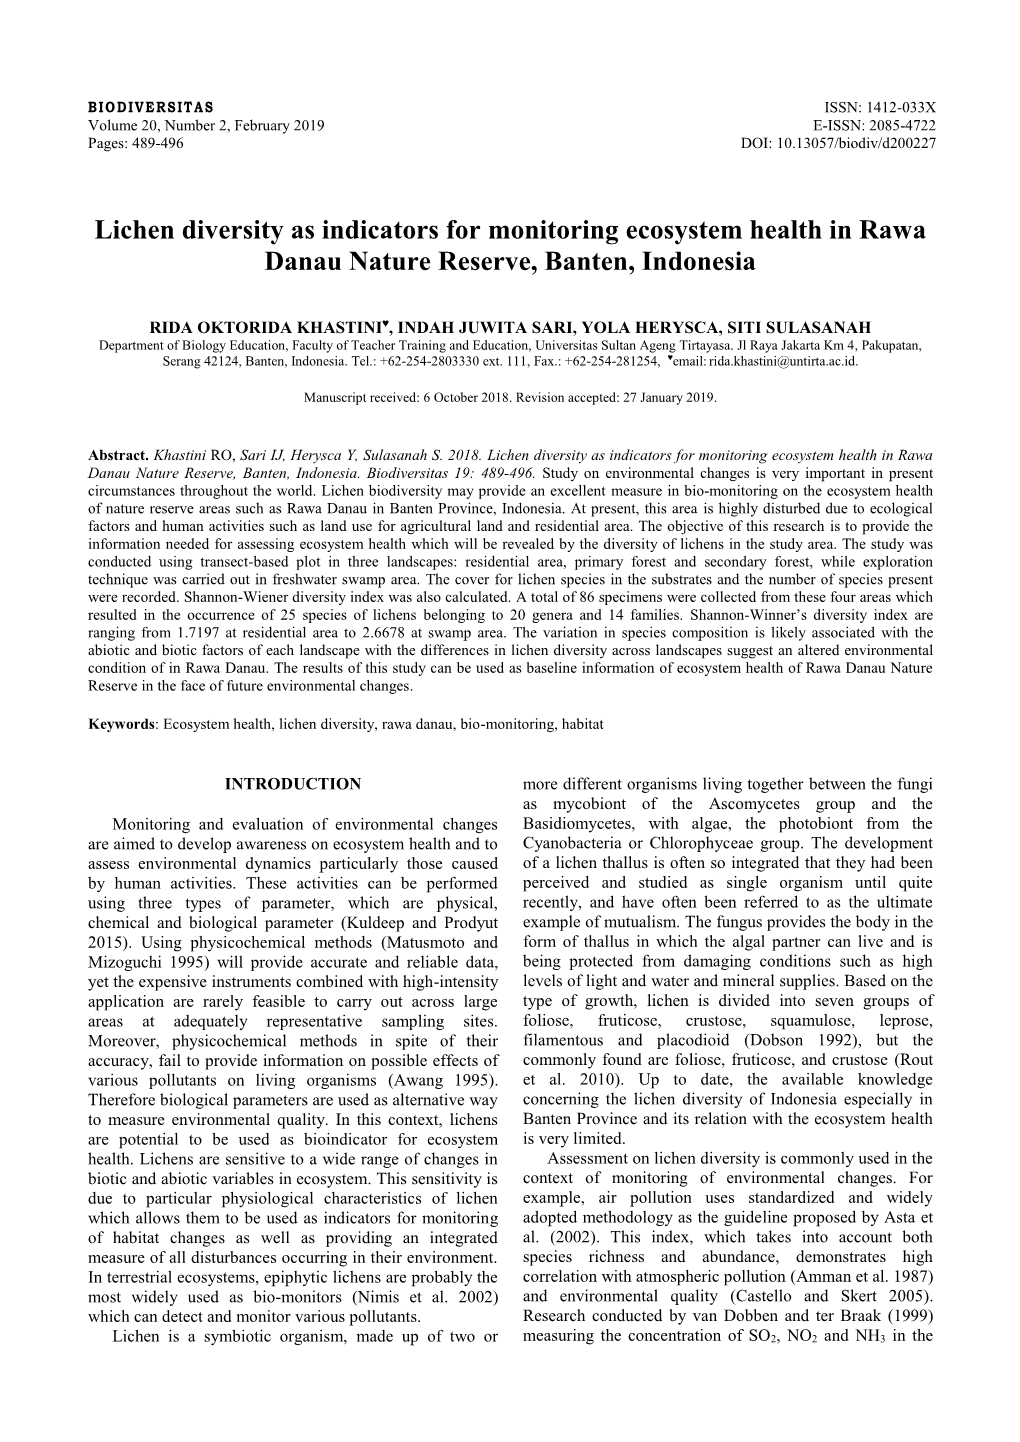 Lichen Diversity As Indicators for Monitoring Ecosystem Health in Rawa Danau Nature Reserve, Banten, Indonesia